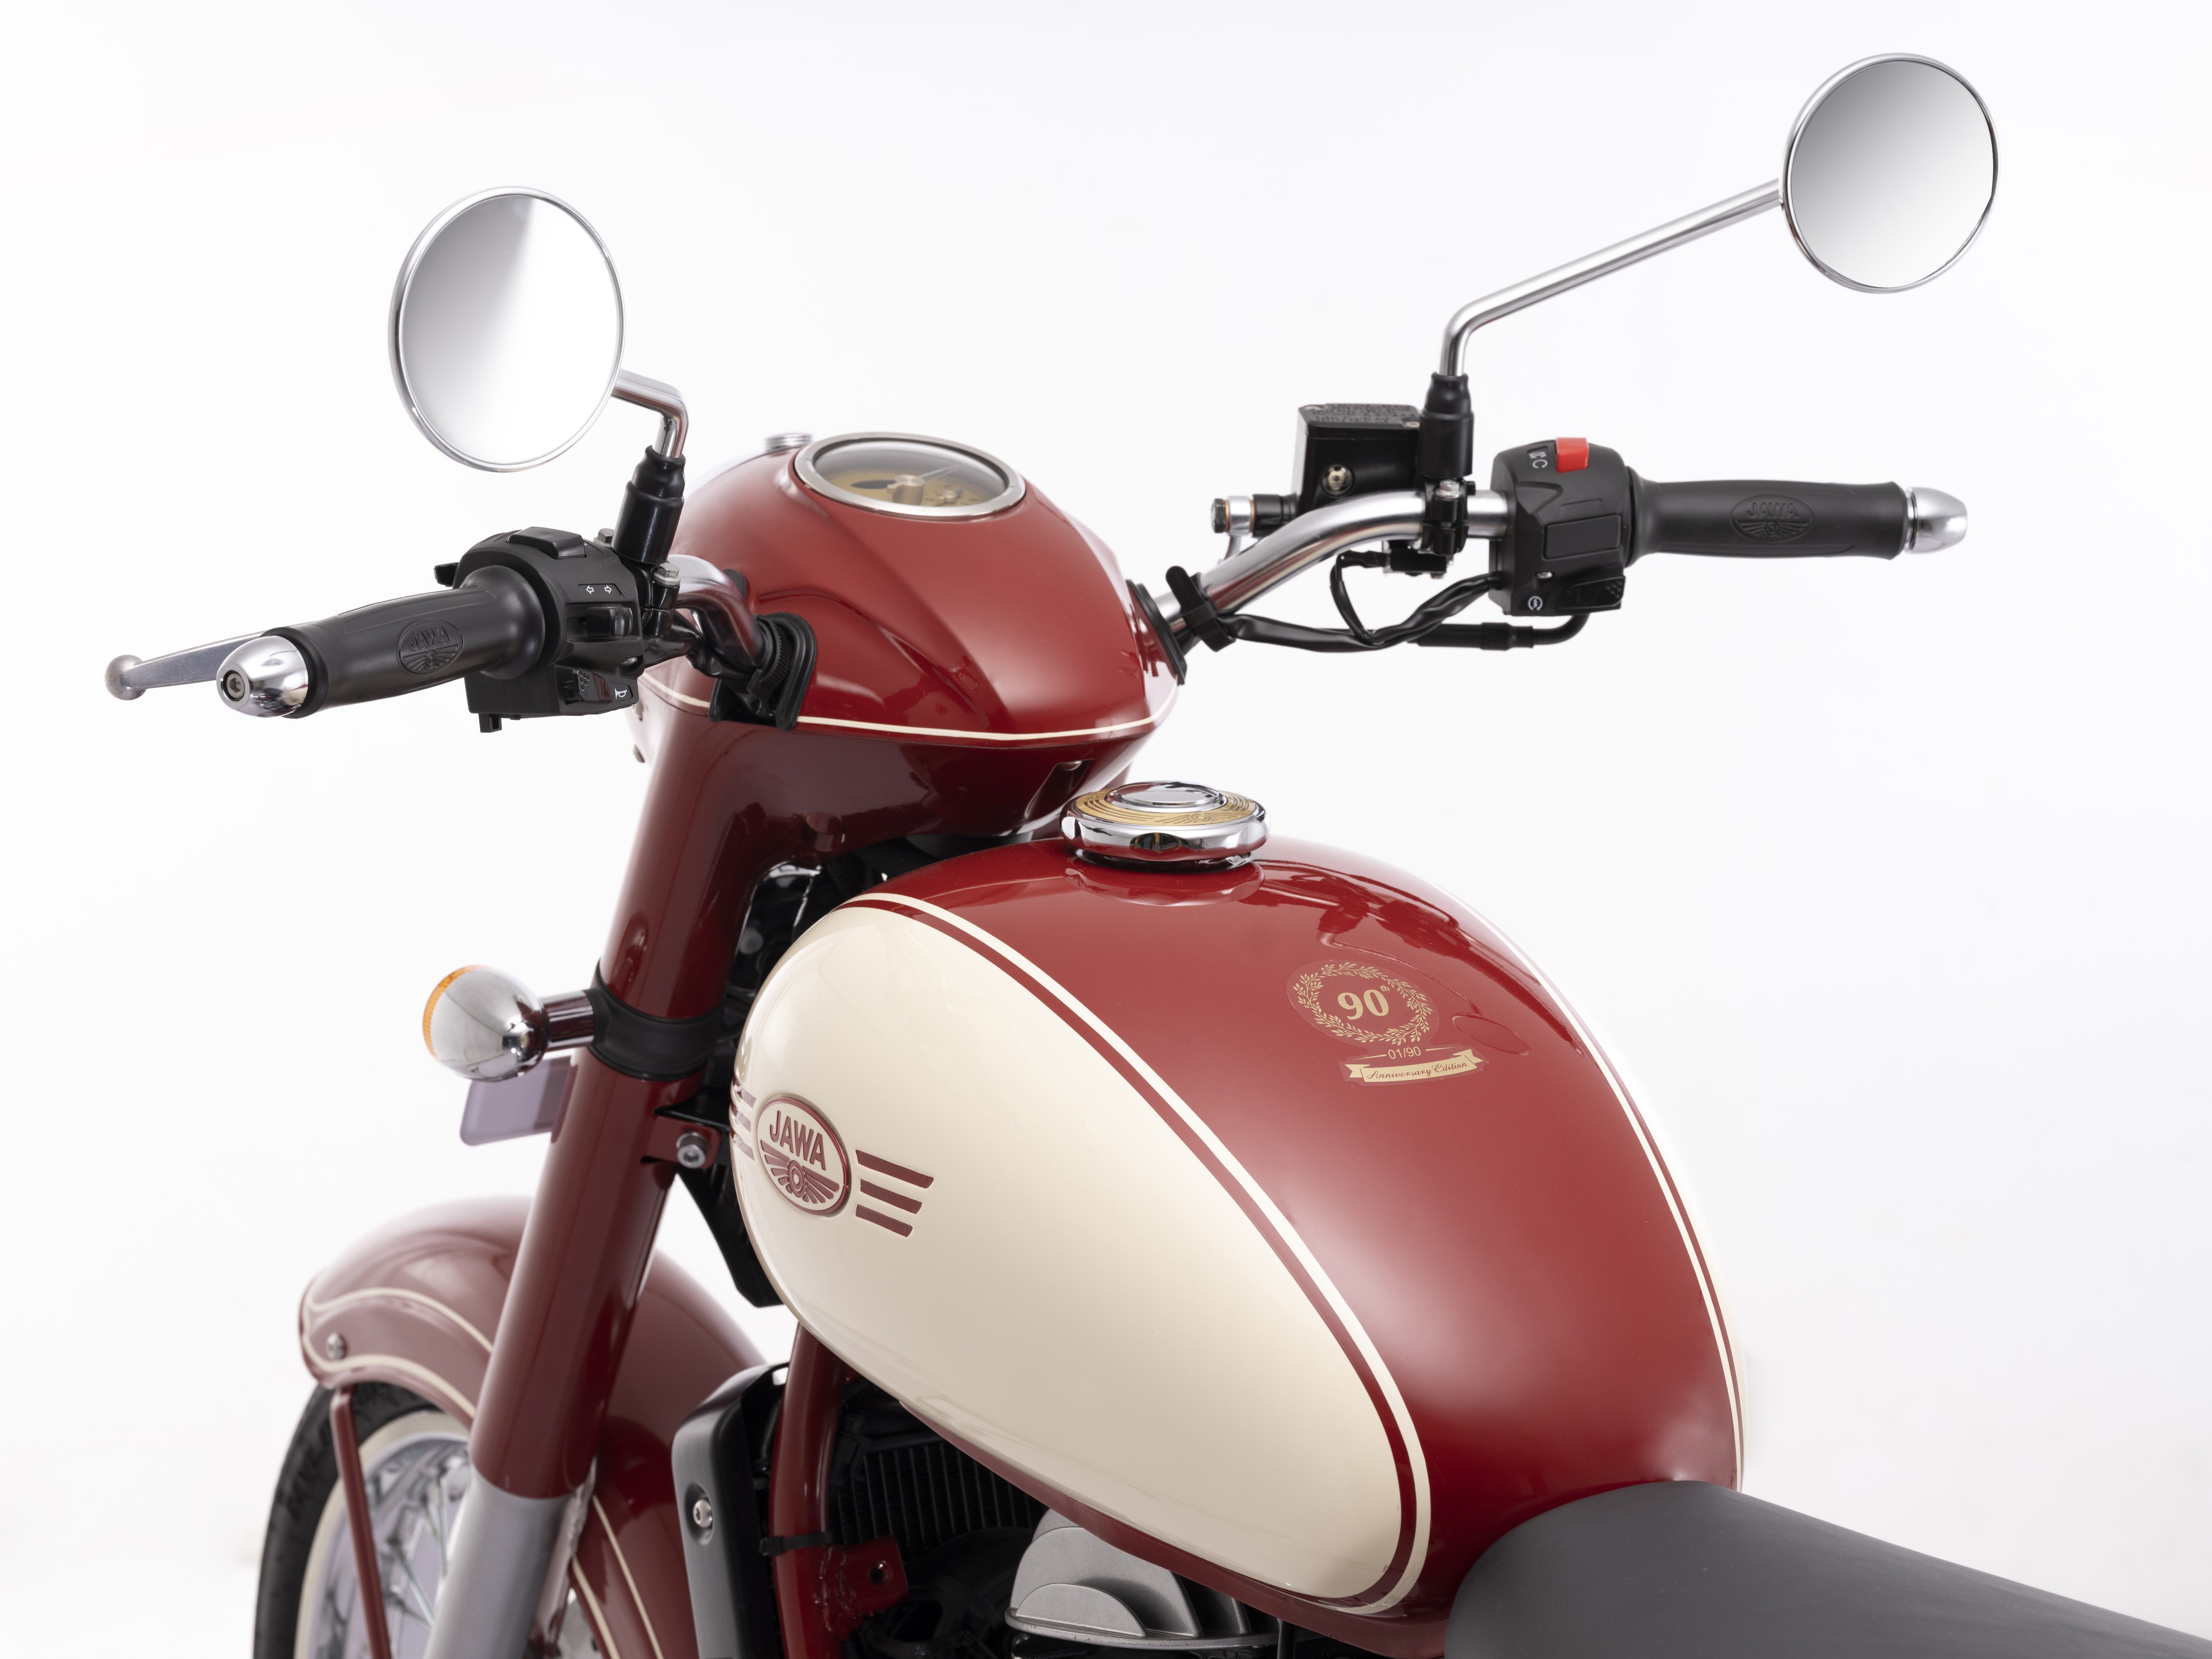 90th Anniversary Edition Jawa Classic Unveiled